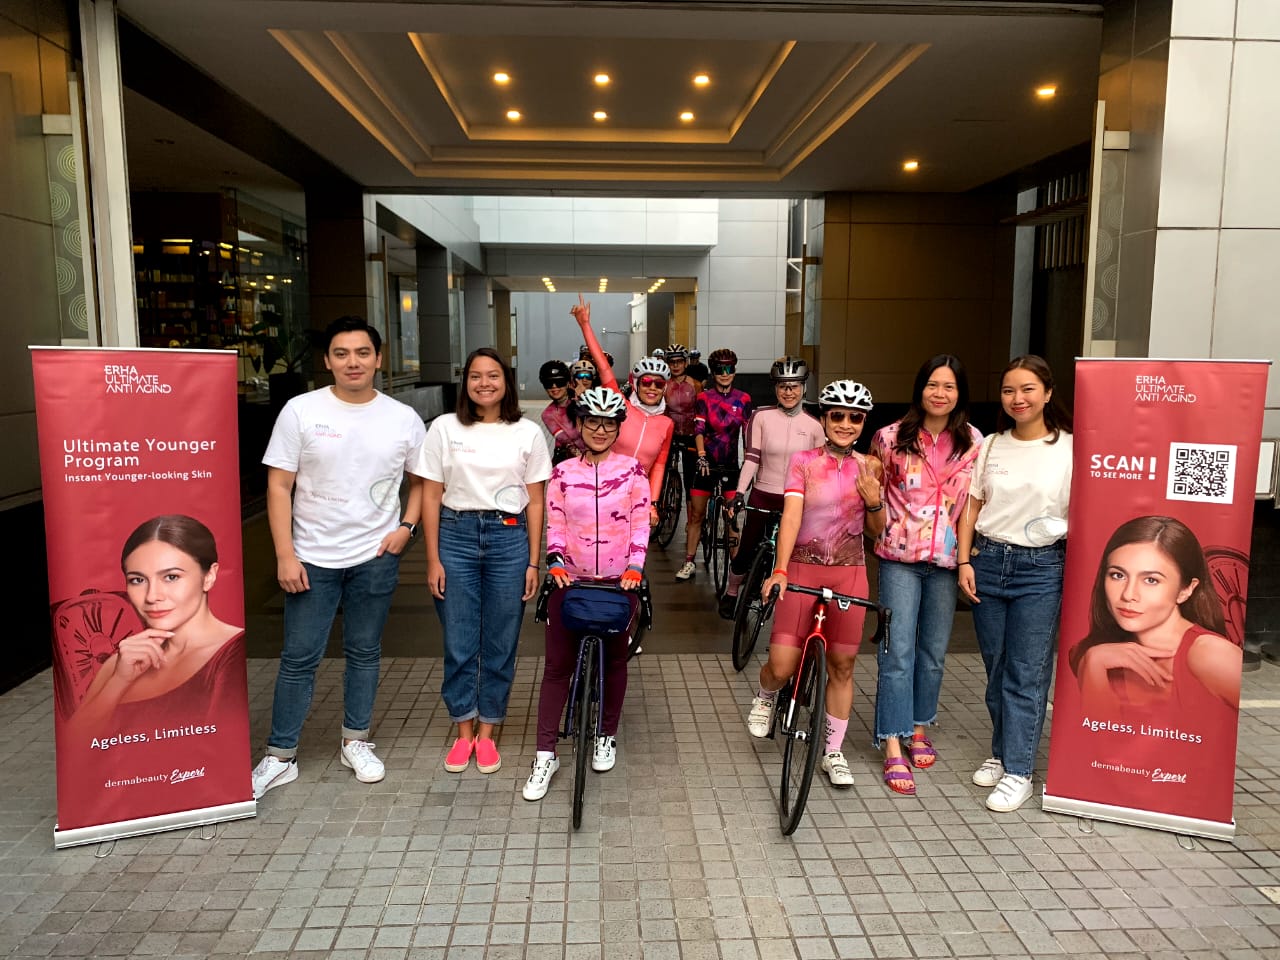 Women’s Cycling Community (WCC) Gandeng Erha Sebarkan Semangat Ageless Limitless